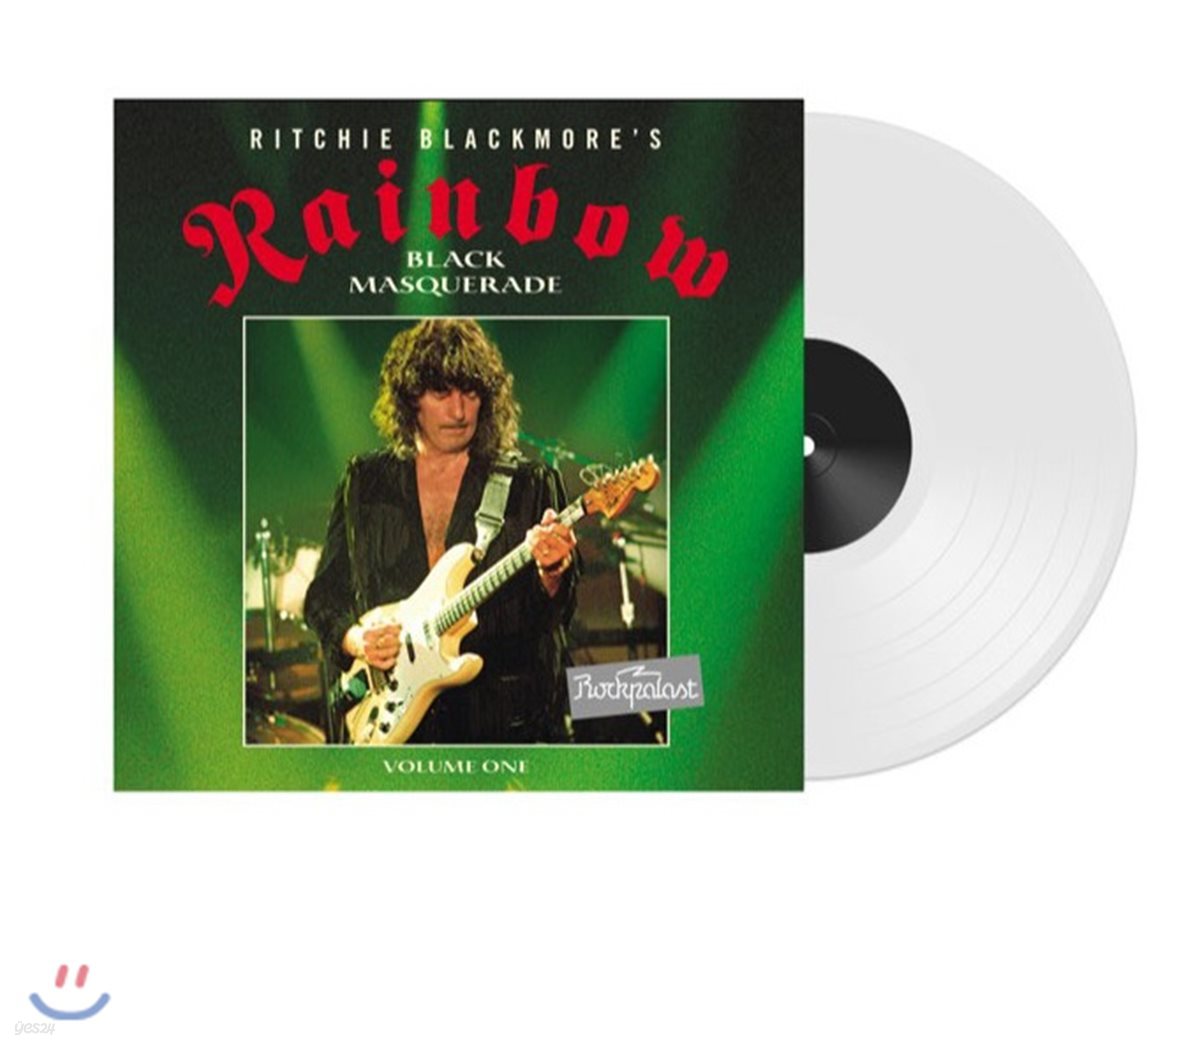 Rainbow - Rockpalast 1995 : Black Masquerade Vol.1 레인보우 독일 뒤셀도르프 라이브 [투명 컬러 2 LP]